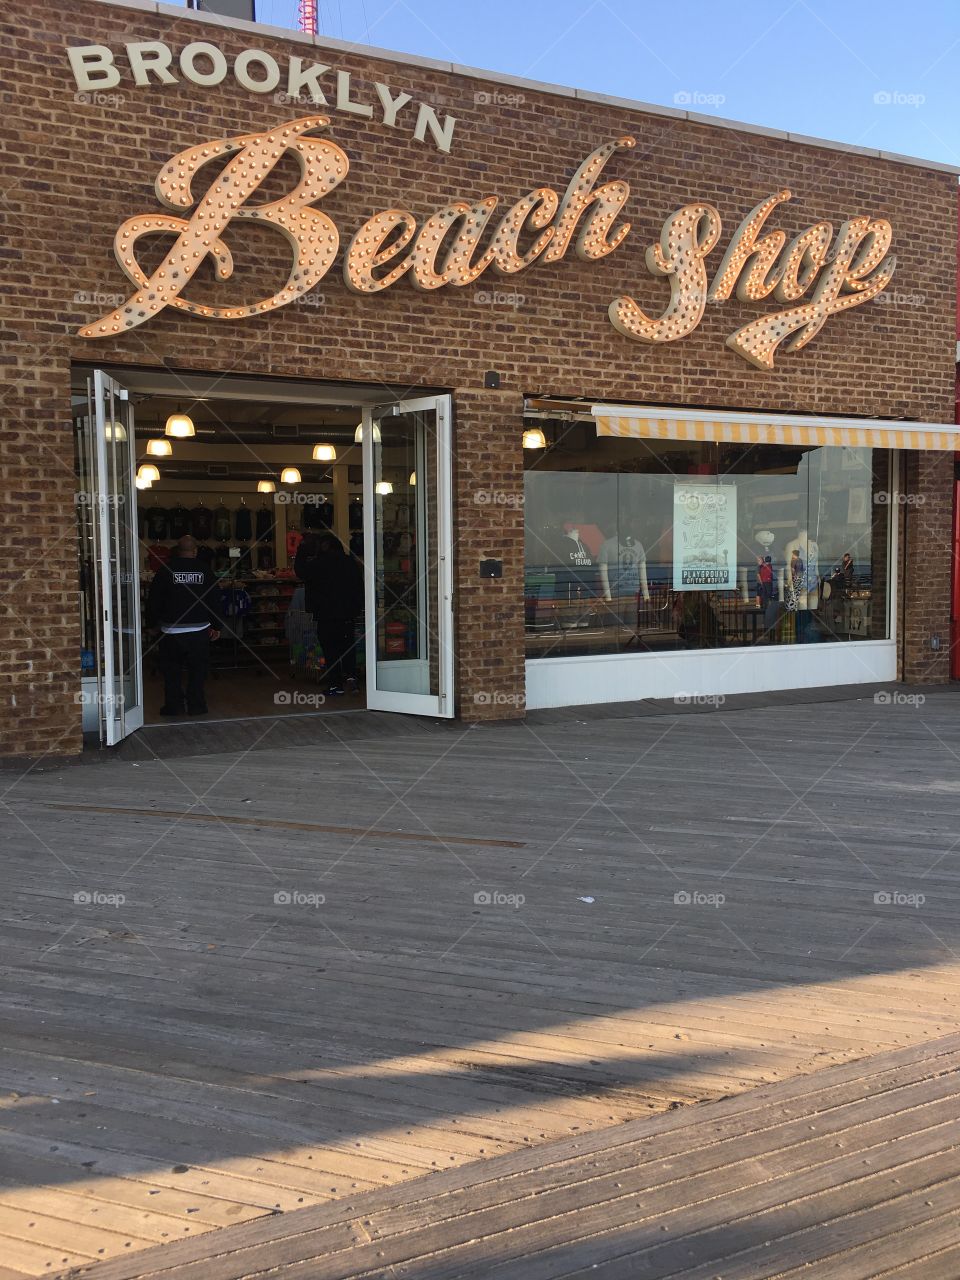 Brooklyn Beach Shop